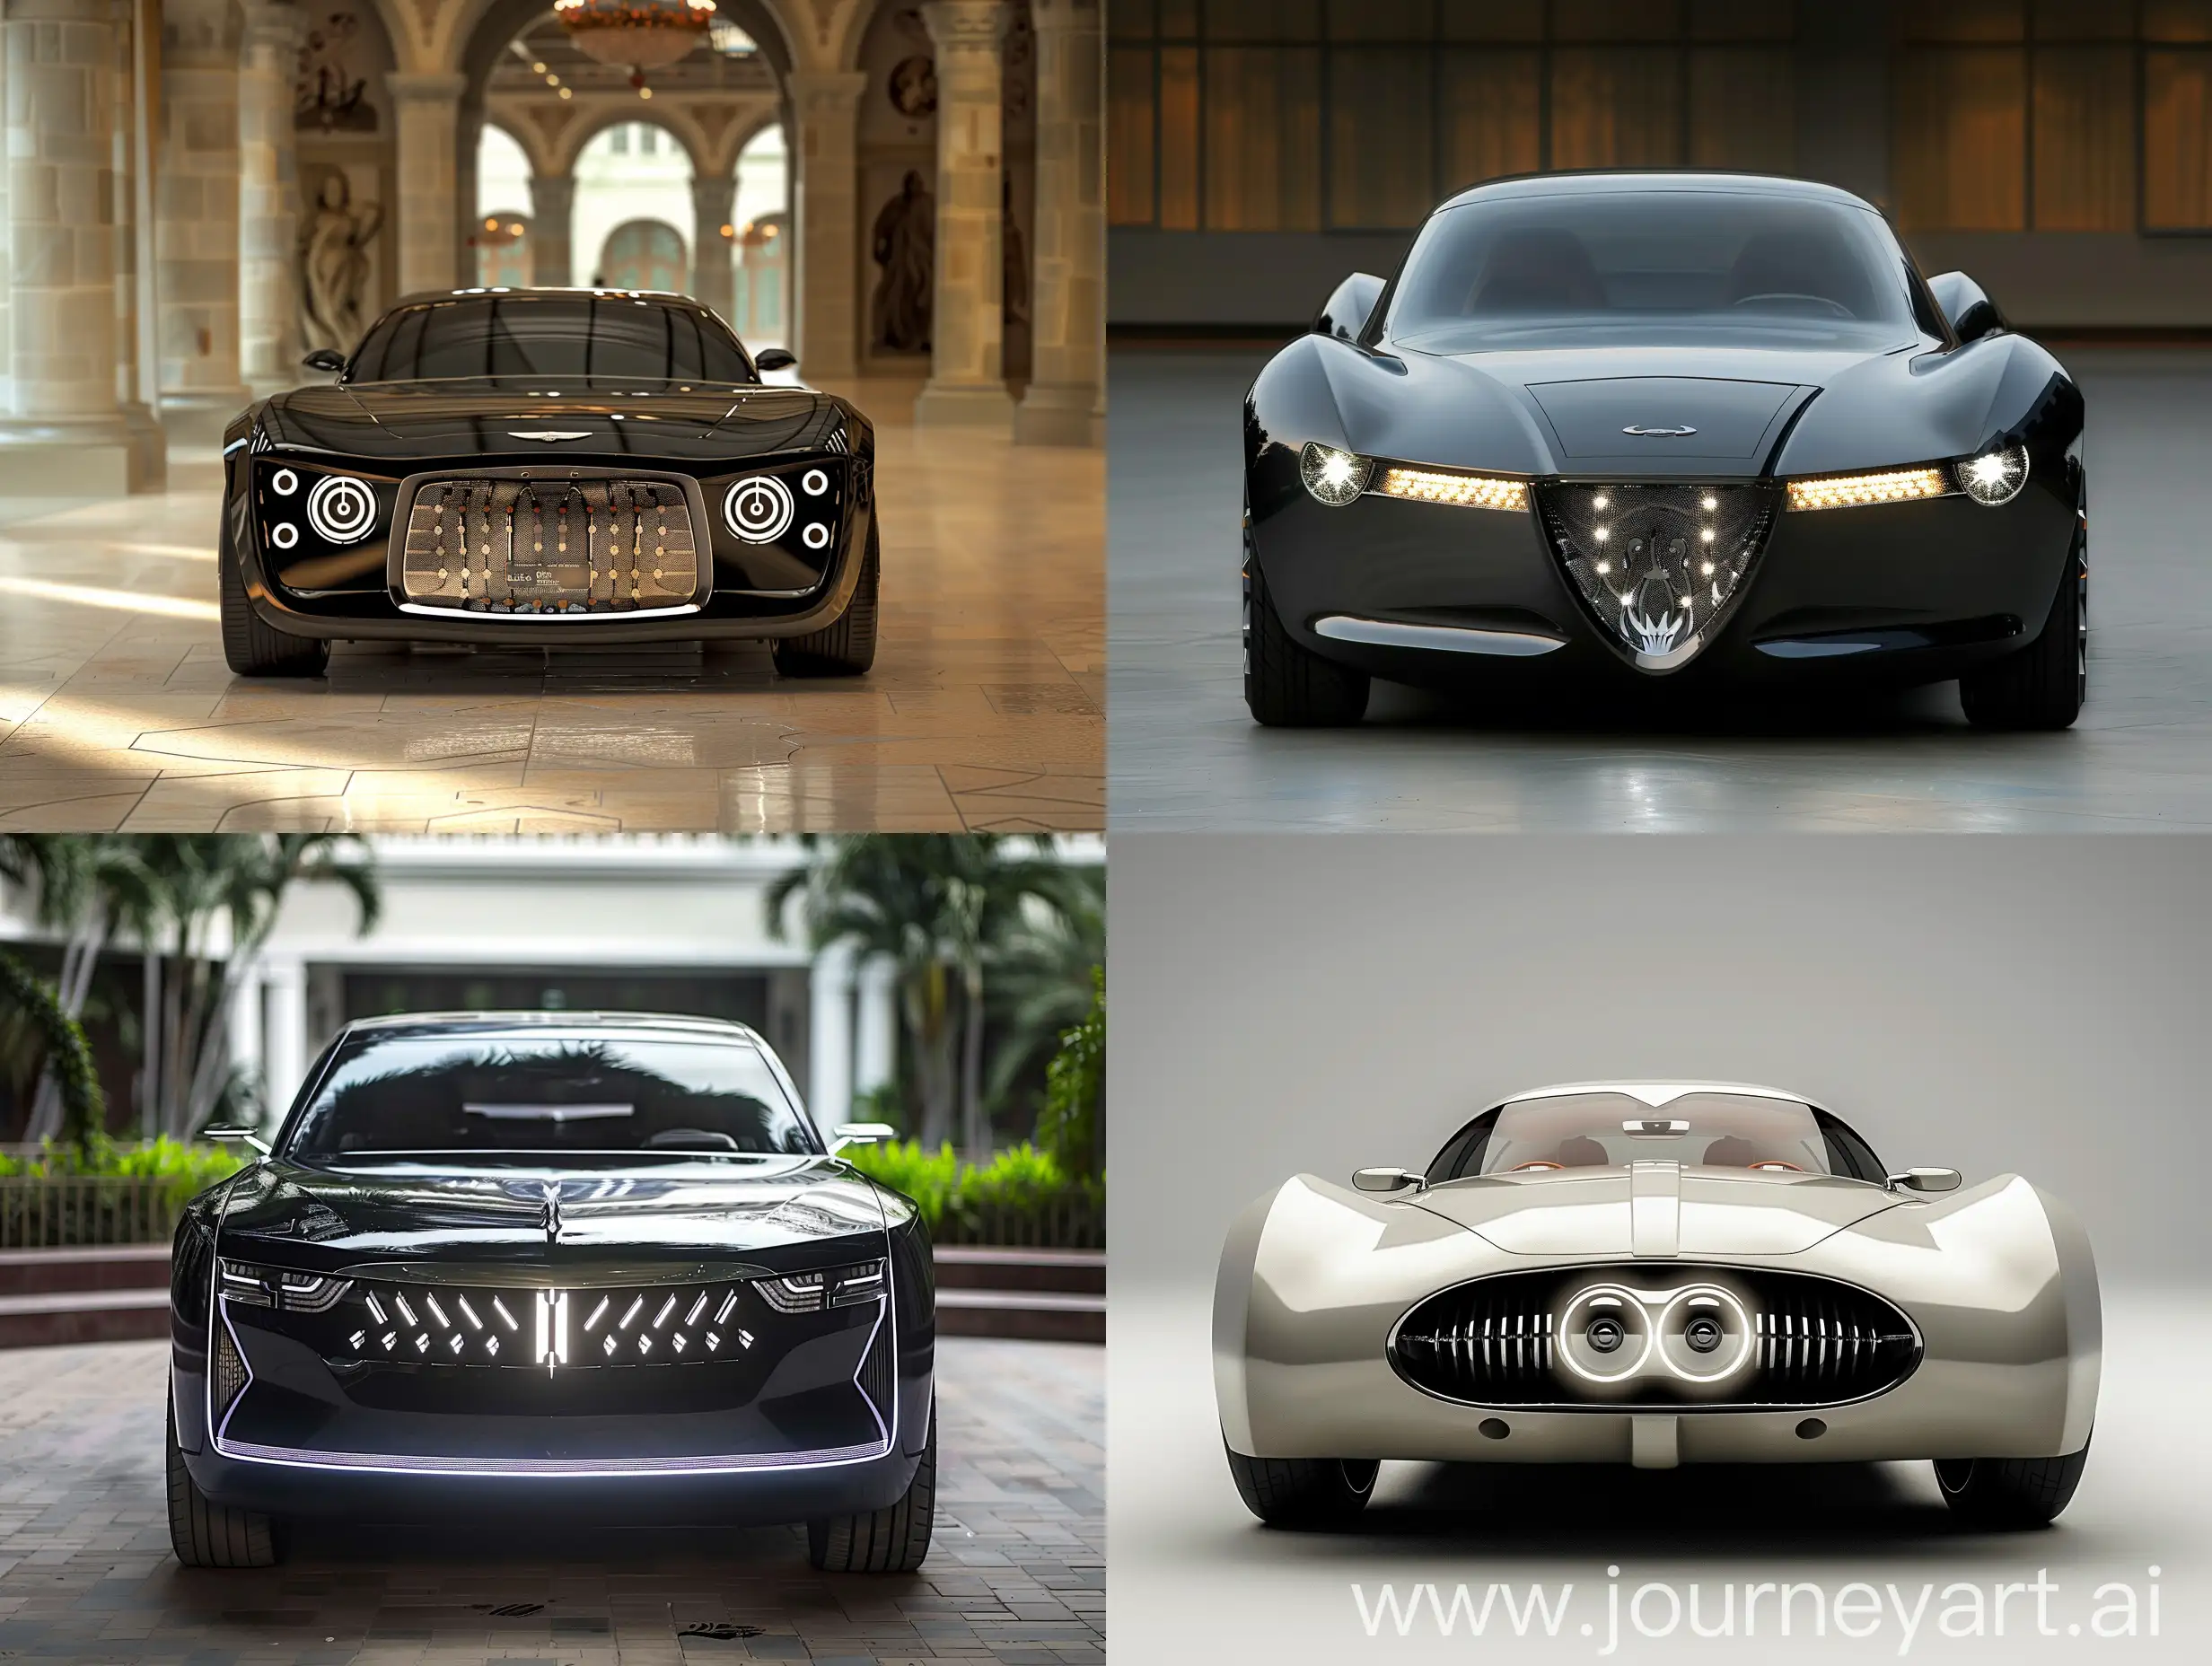 Futuristic-Redesigned-Hindustan-Motors-Ambassador-Sedan-Car-Elegant-Front-View